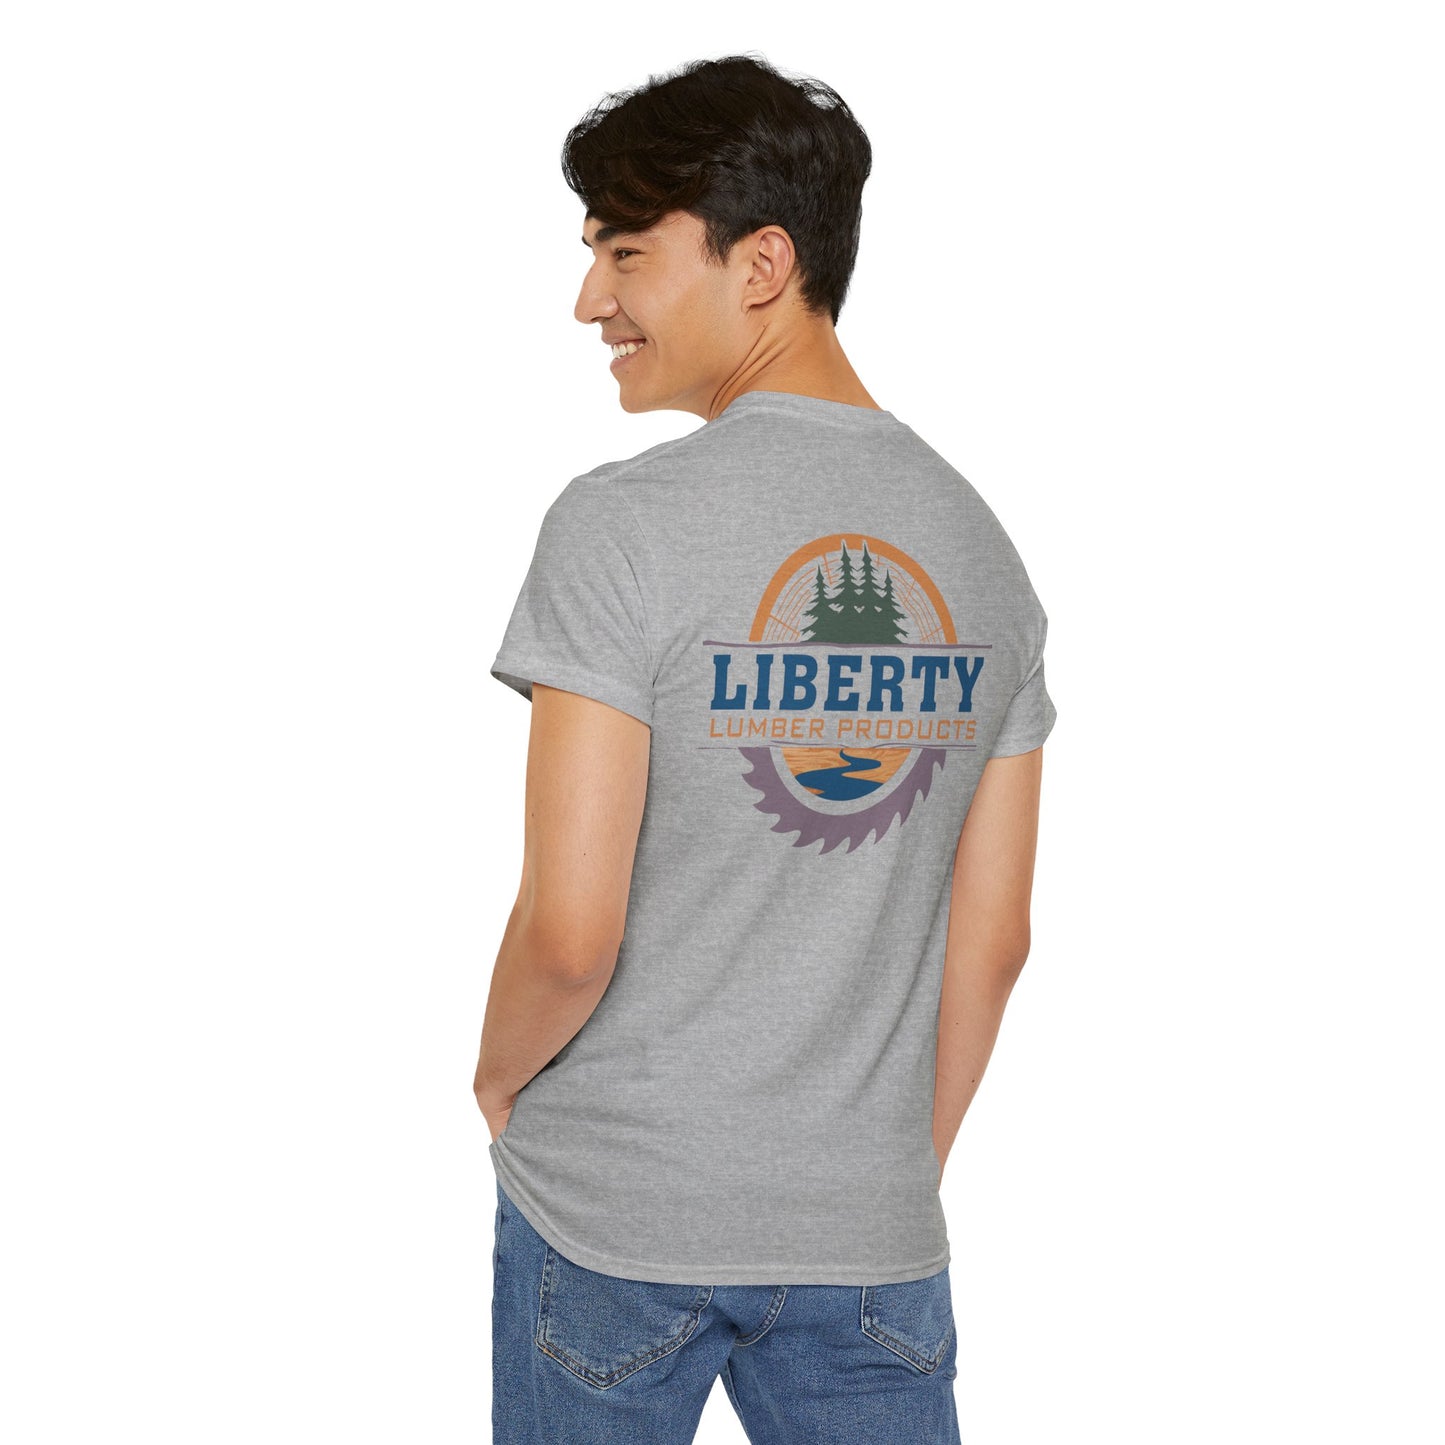 Liberty Lumber Products Logo Cotton Tee